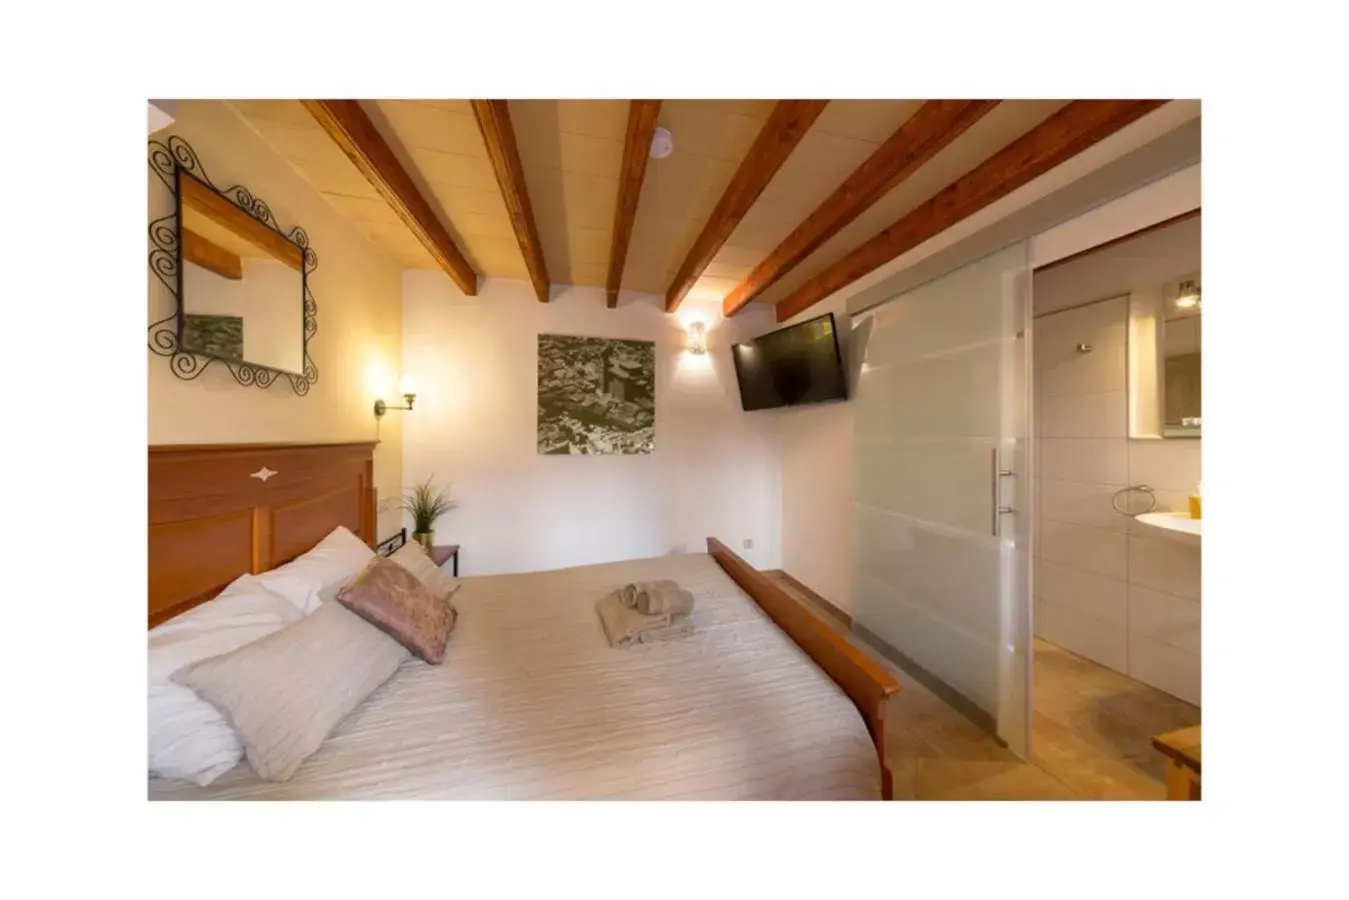 Bedroom, Bed in Boutique Hostal "Born53" im Stadtkern von Llucmajor, Mallorca